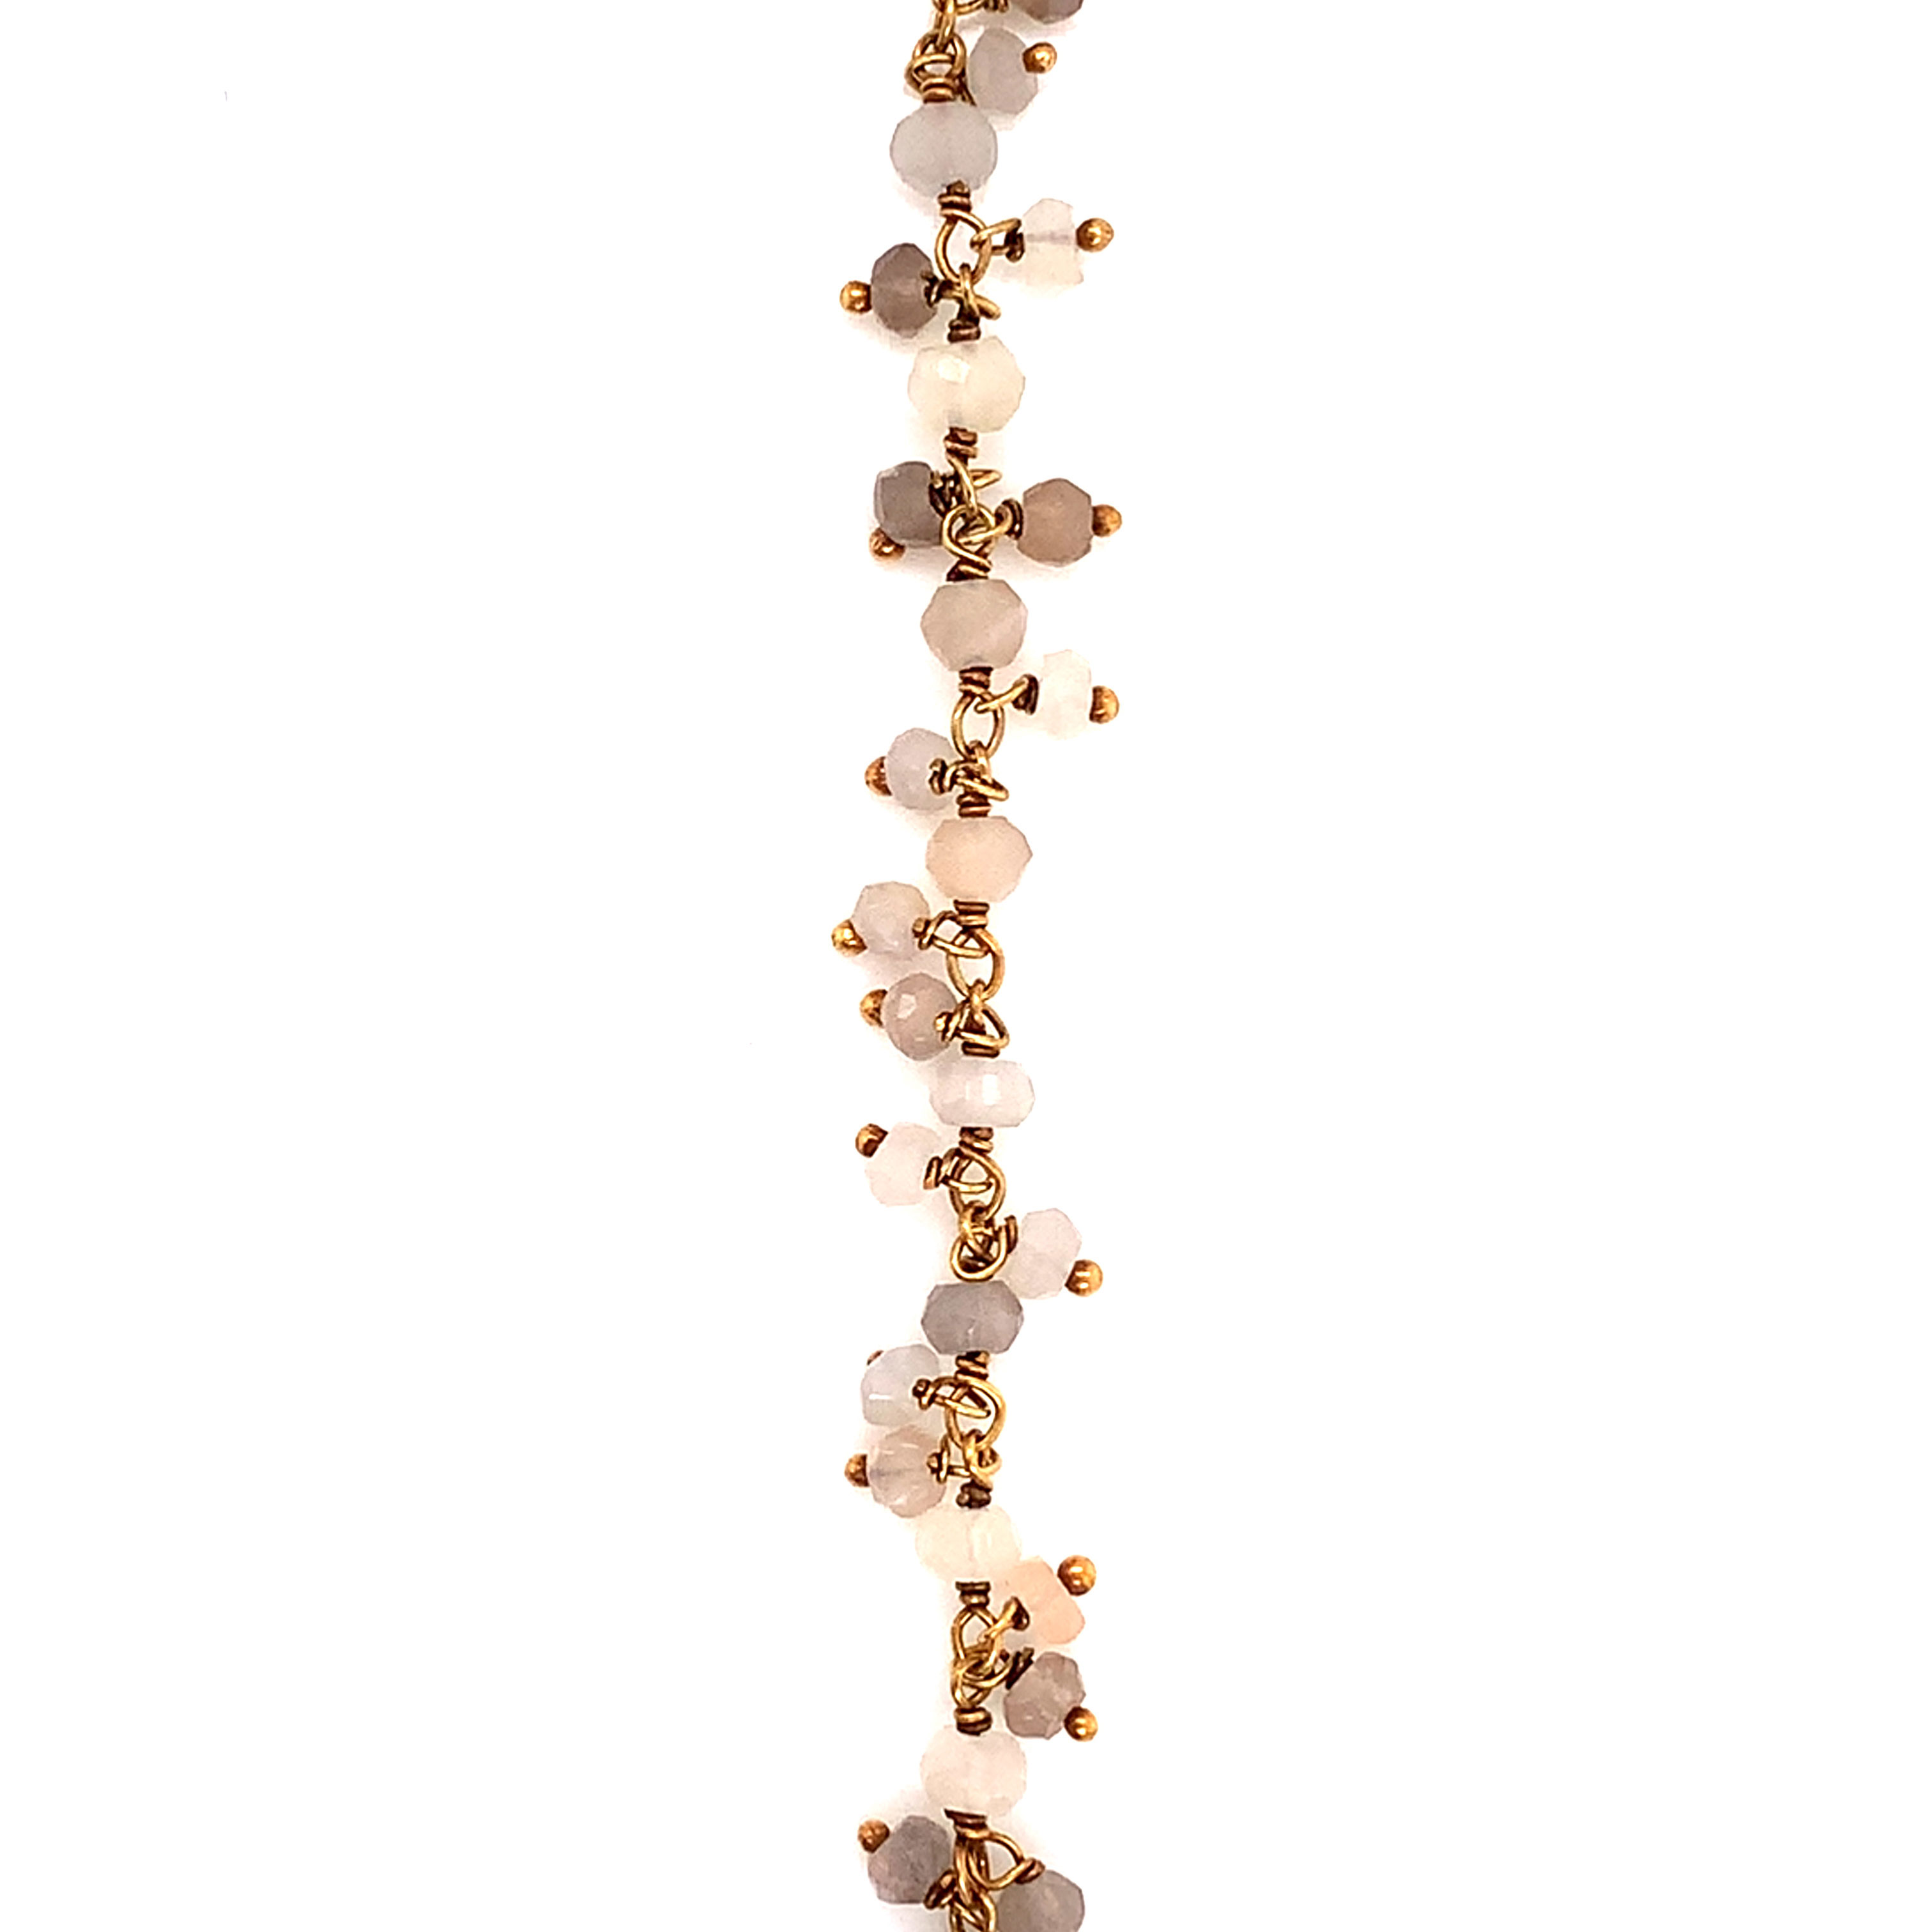 3mm Dangling Quartz Vermeil Chain - Gold Plated - Price Per Foot